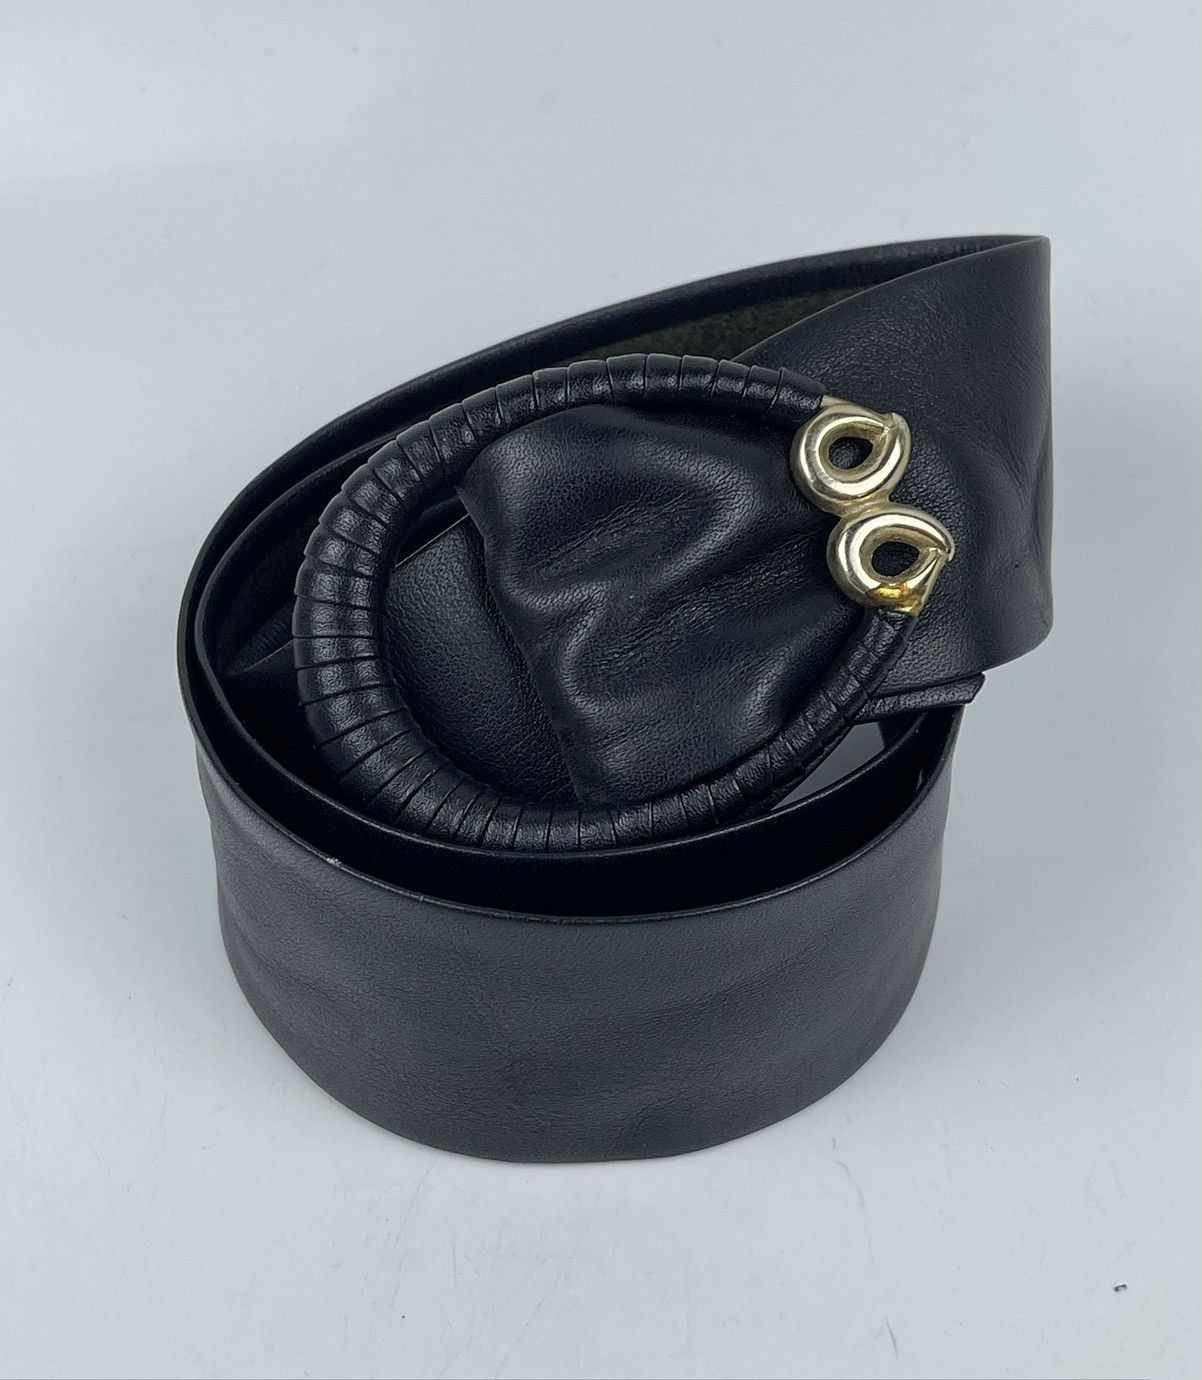 Genuine Leather - yuki torii leather belt tc18 - 1